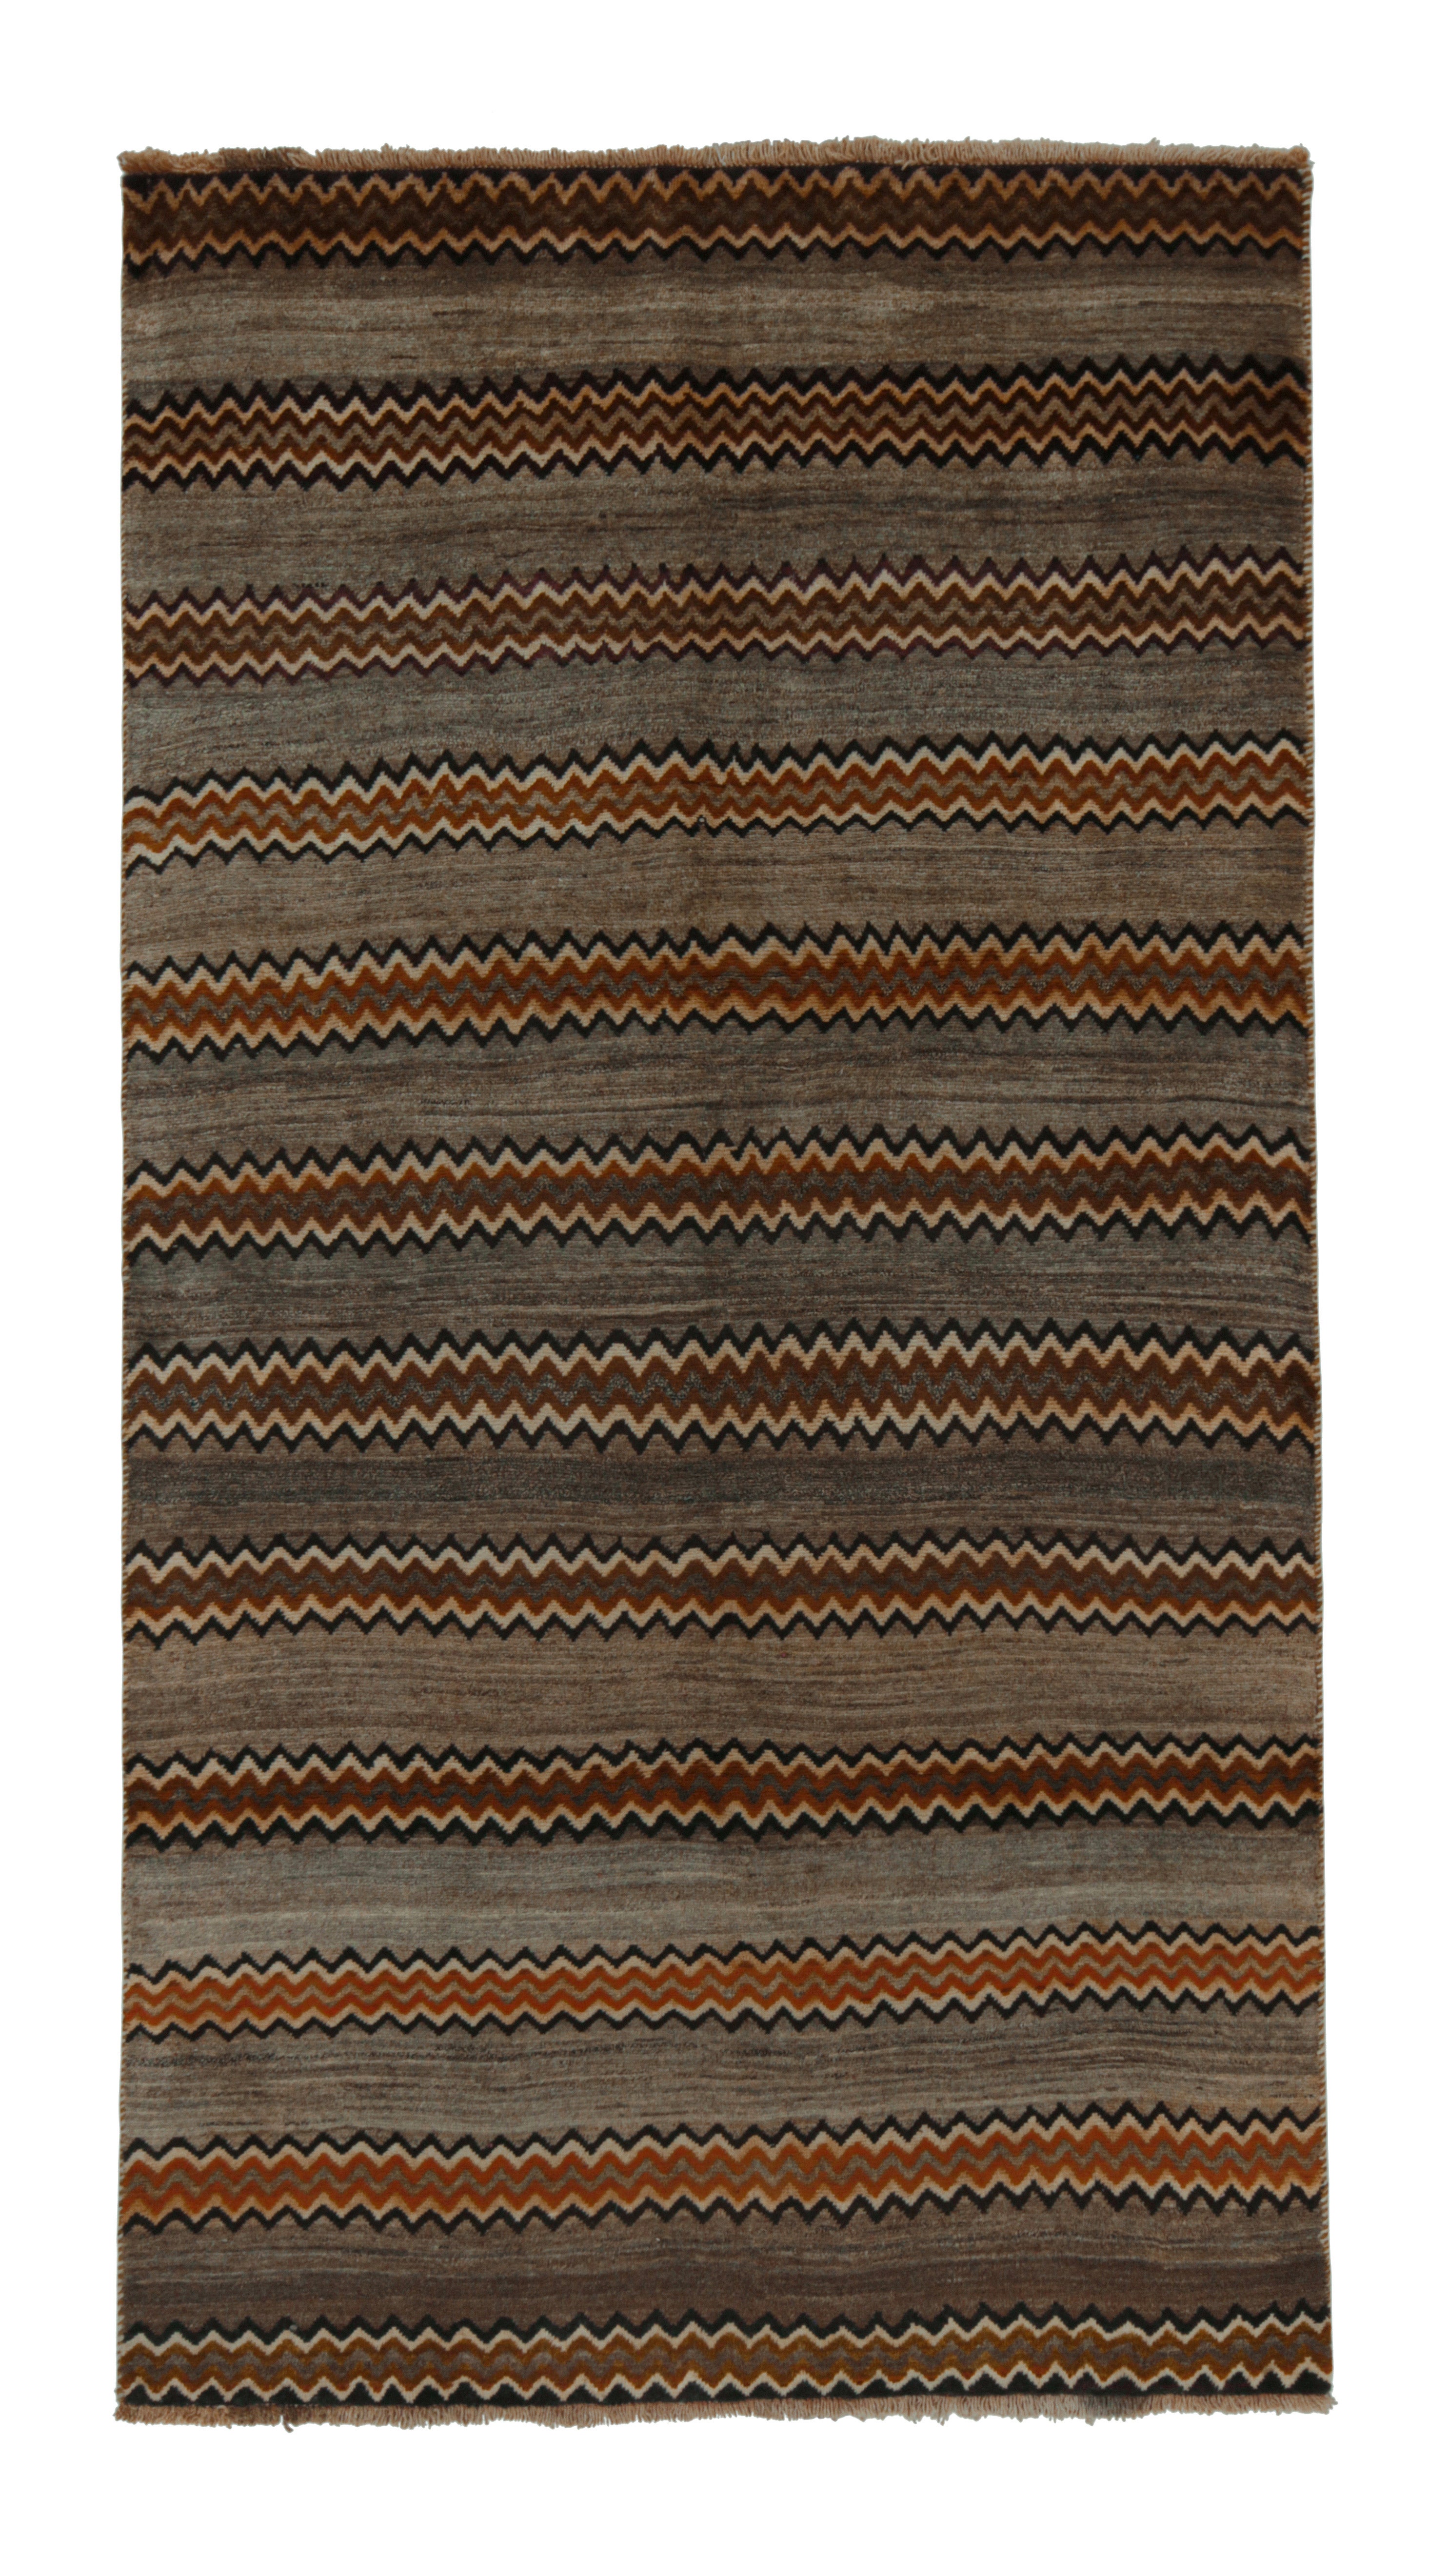 Vintage Gabbeh Tribal Rug in Gray & Beige-Brown Chevron Patterns by Rug & Kilim For Sale